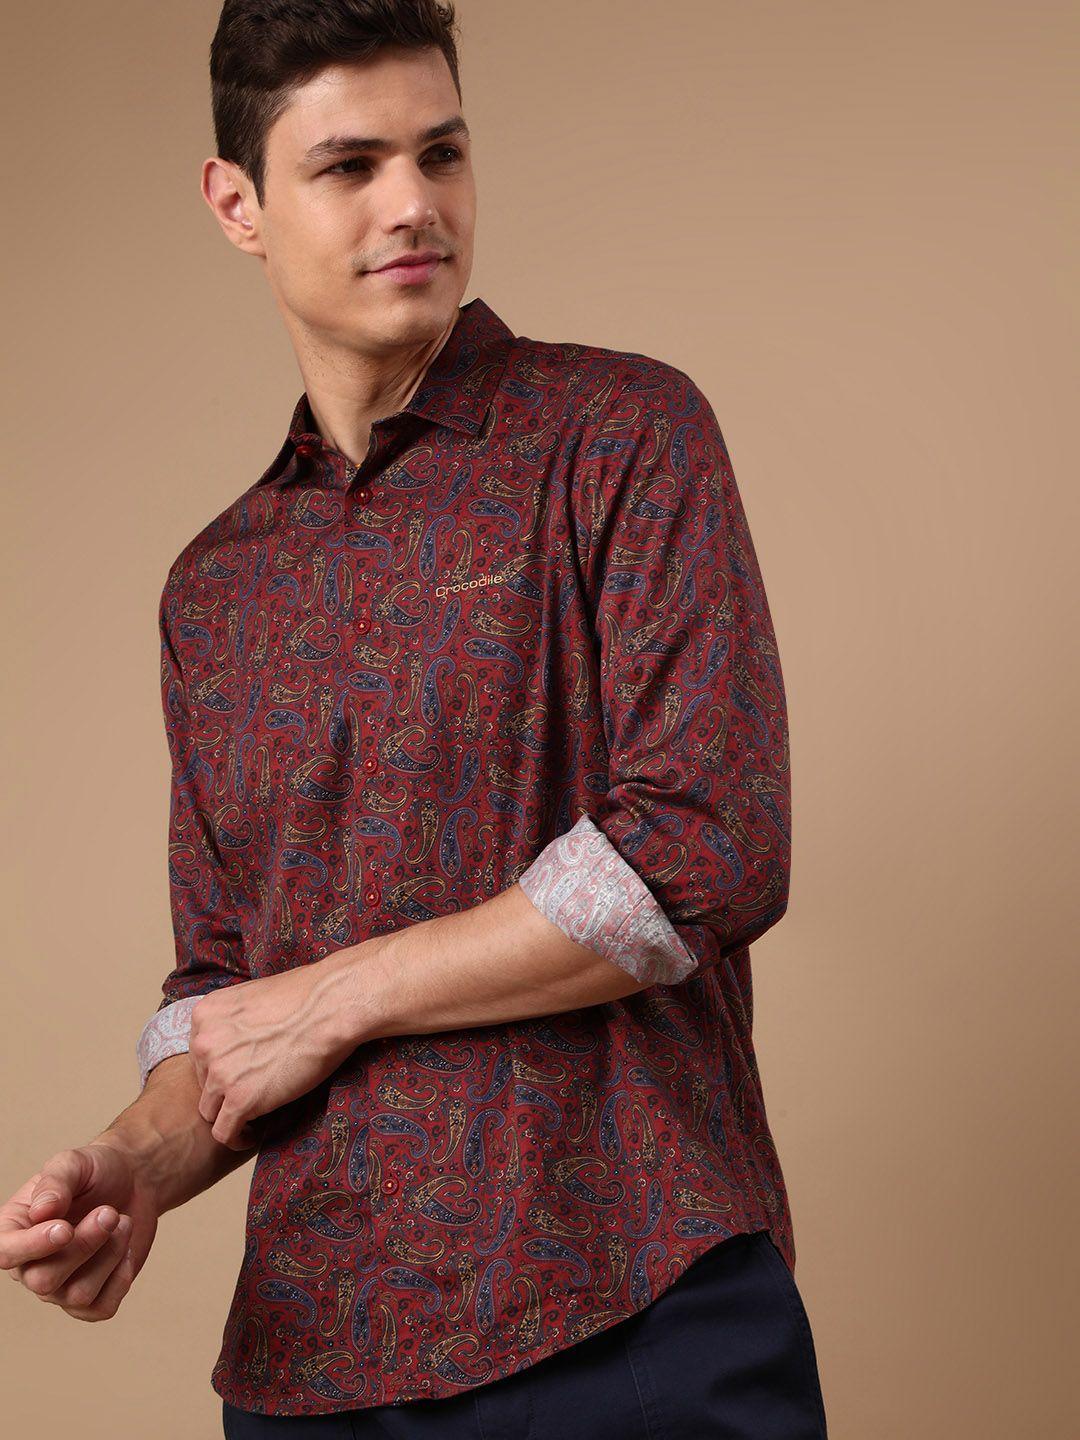 crocodile comfort ethnic motifs printed cotton shirt